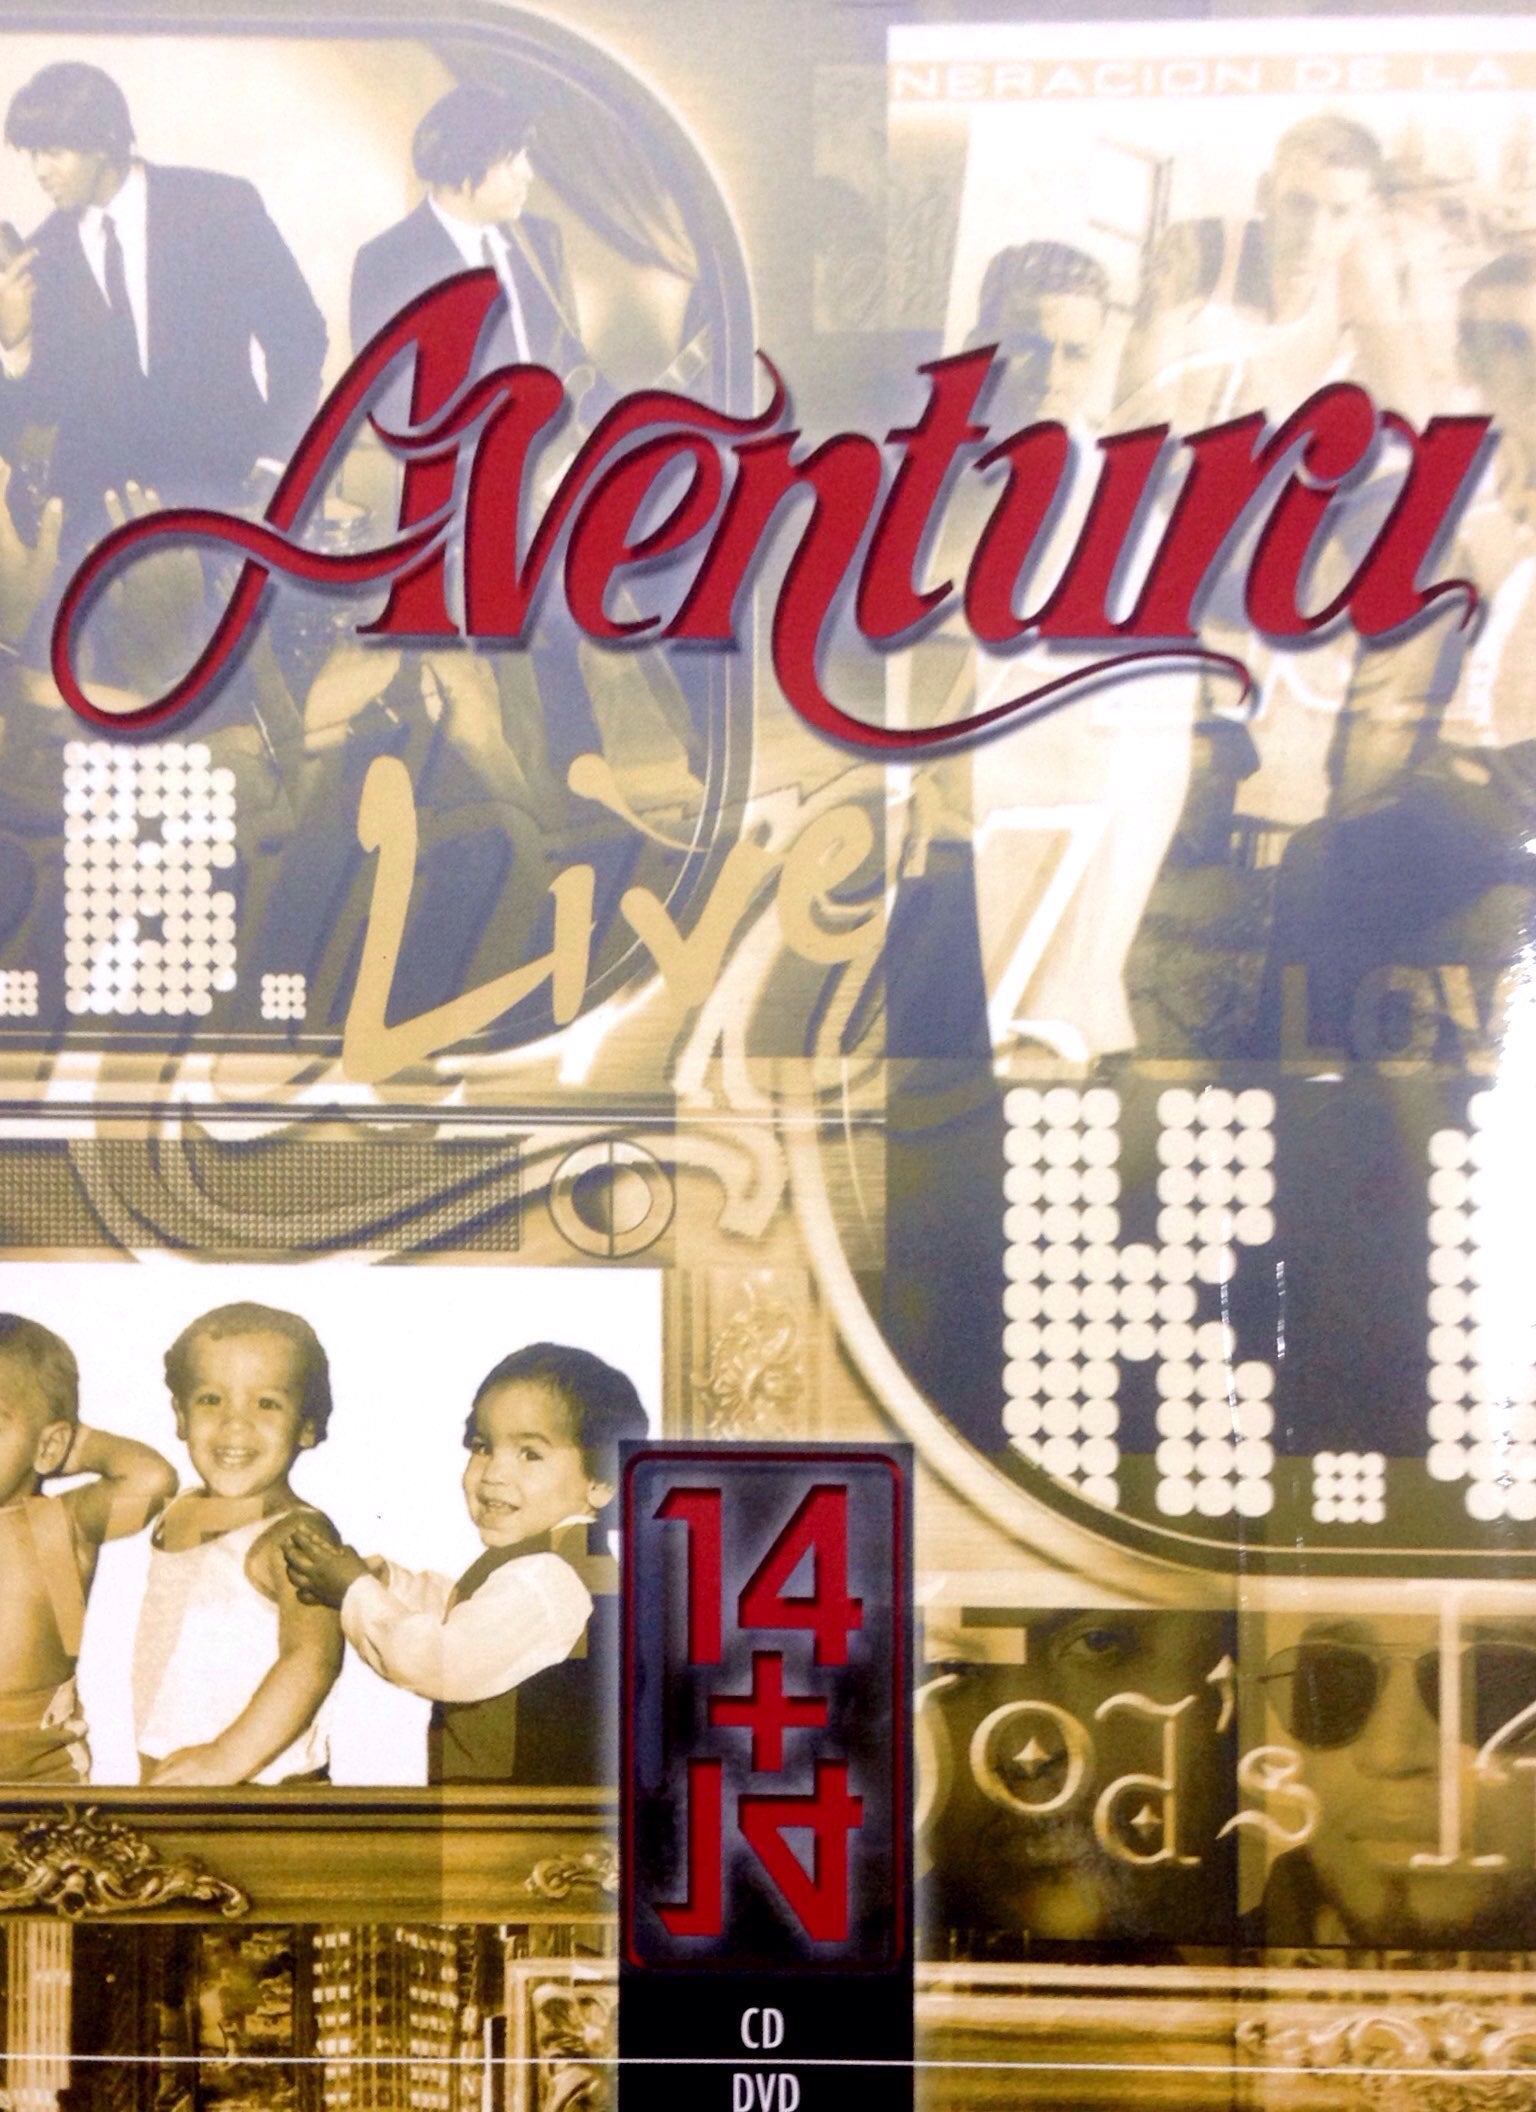 CD + DVD Aventura - 14 + 14 Live